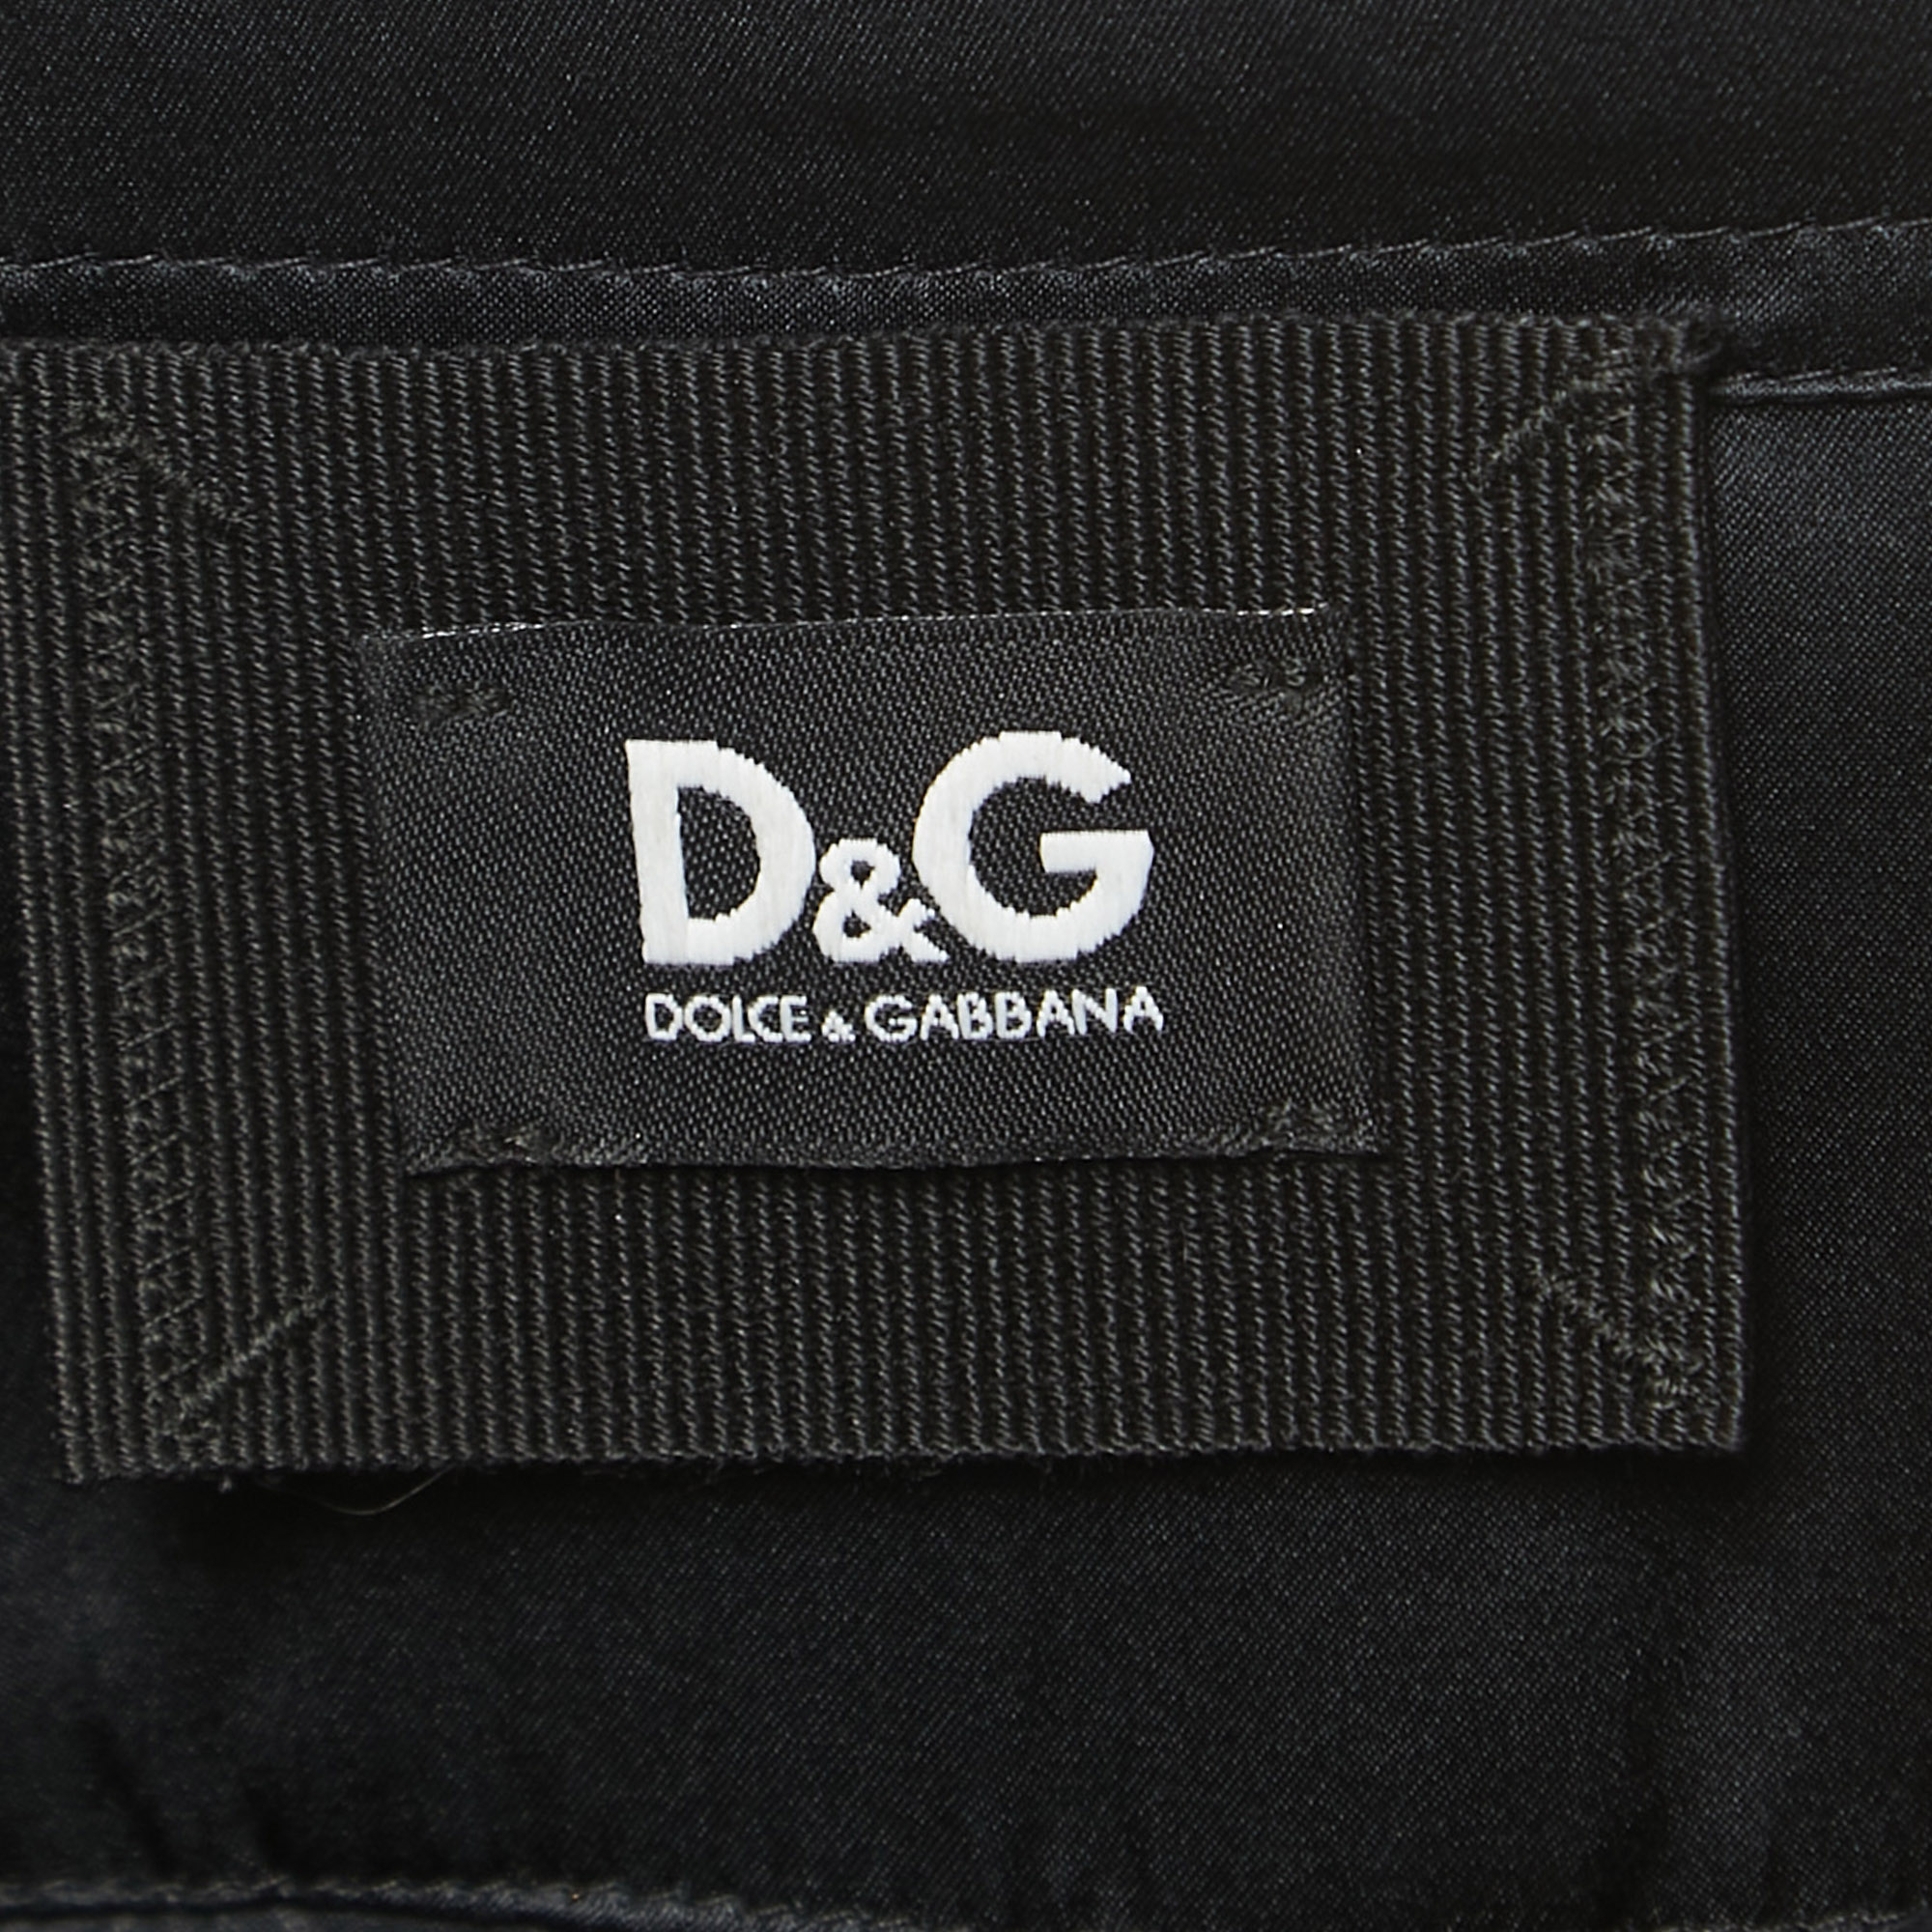 D&G Black Satin Button Front Knit Sleeve Shirt M